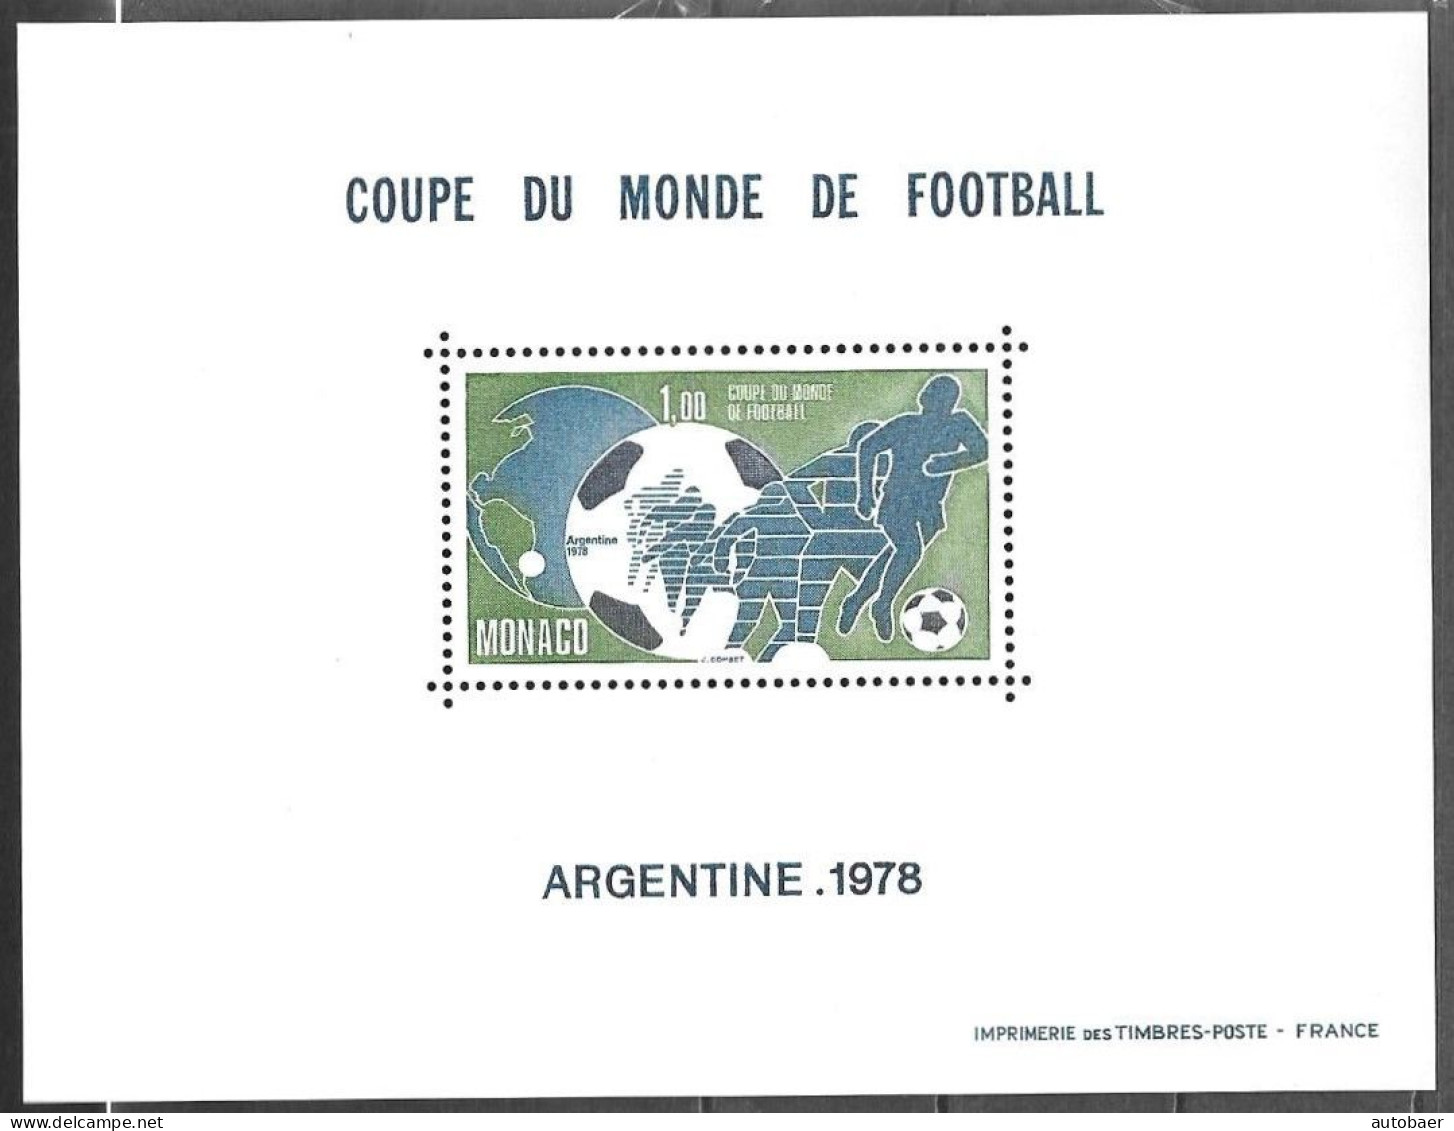 Monaco 1978 Football Coupe Du Monde World Championship Yv.no. 10 (1138) Michel No. 1315 Bl. A Mint Postfr. Neuf MNH ** - Blocks & Kleinbögen